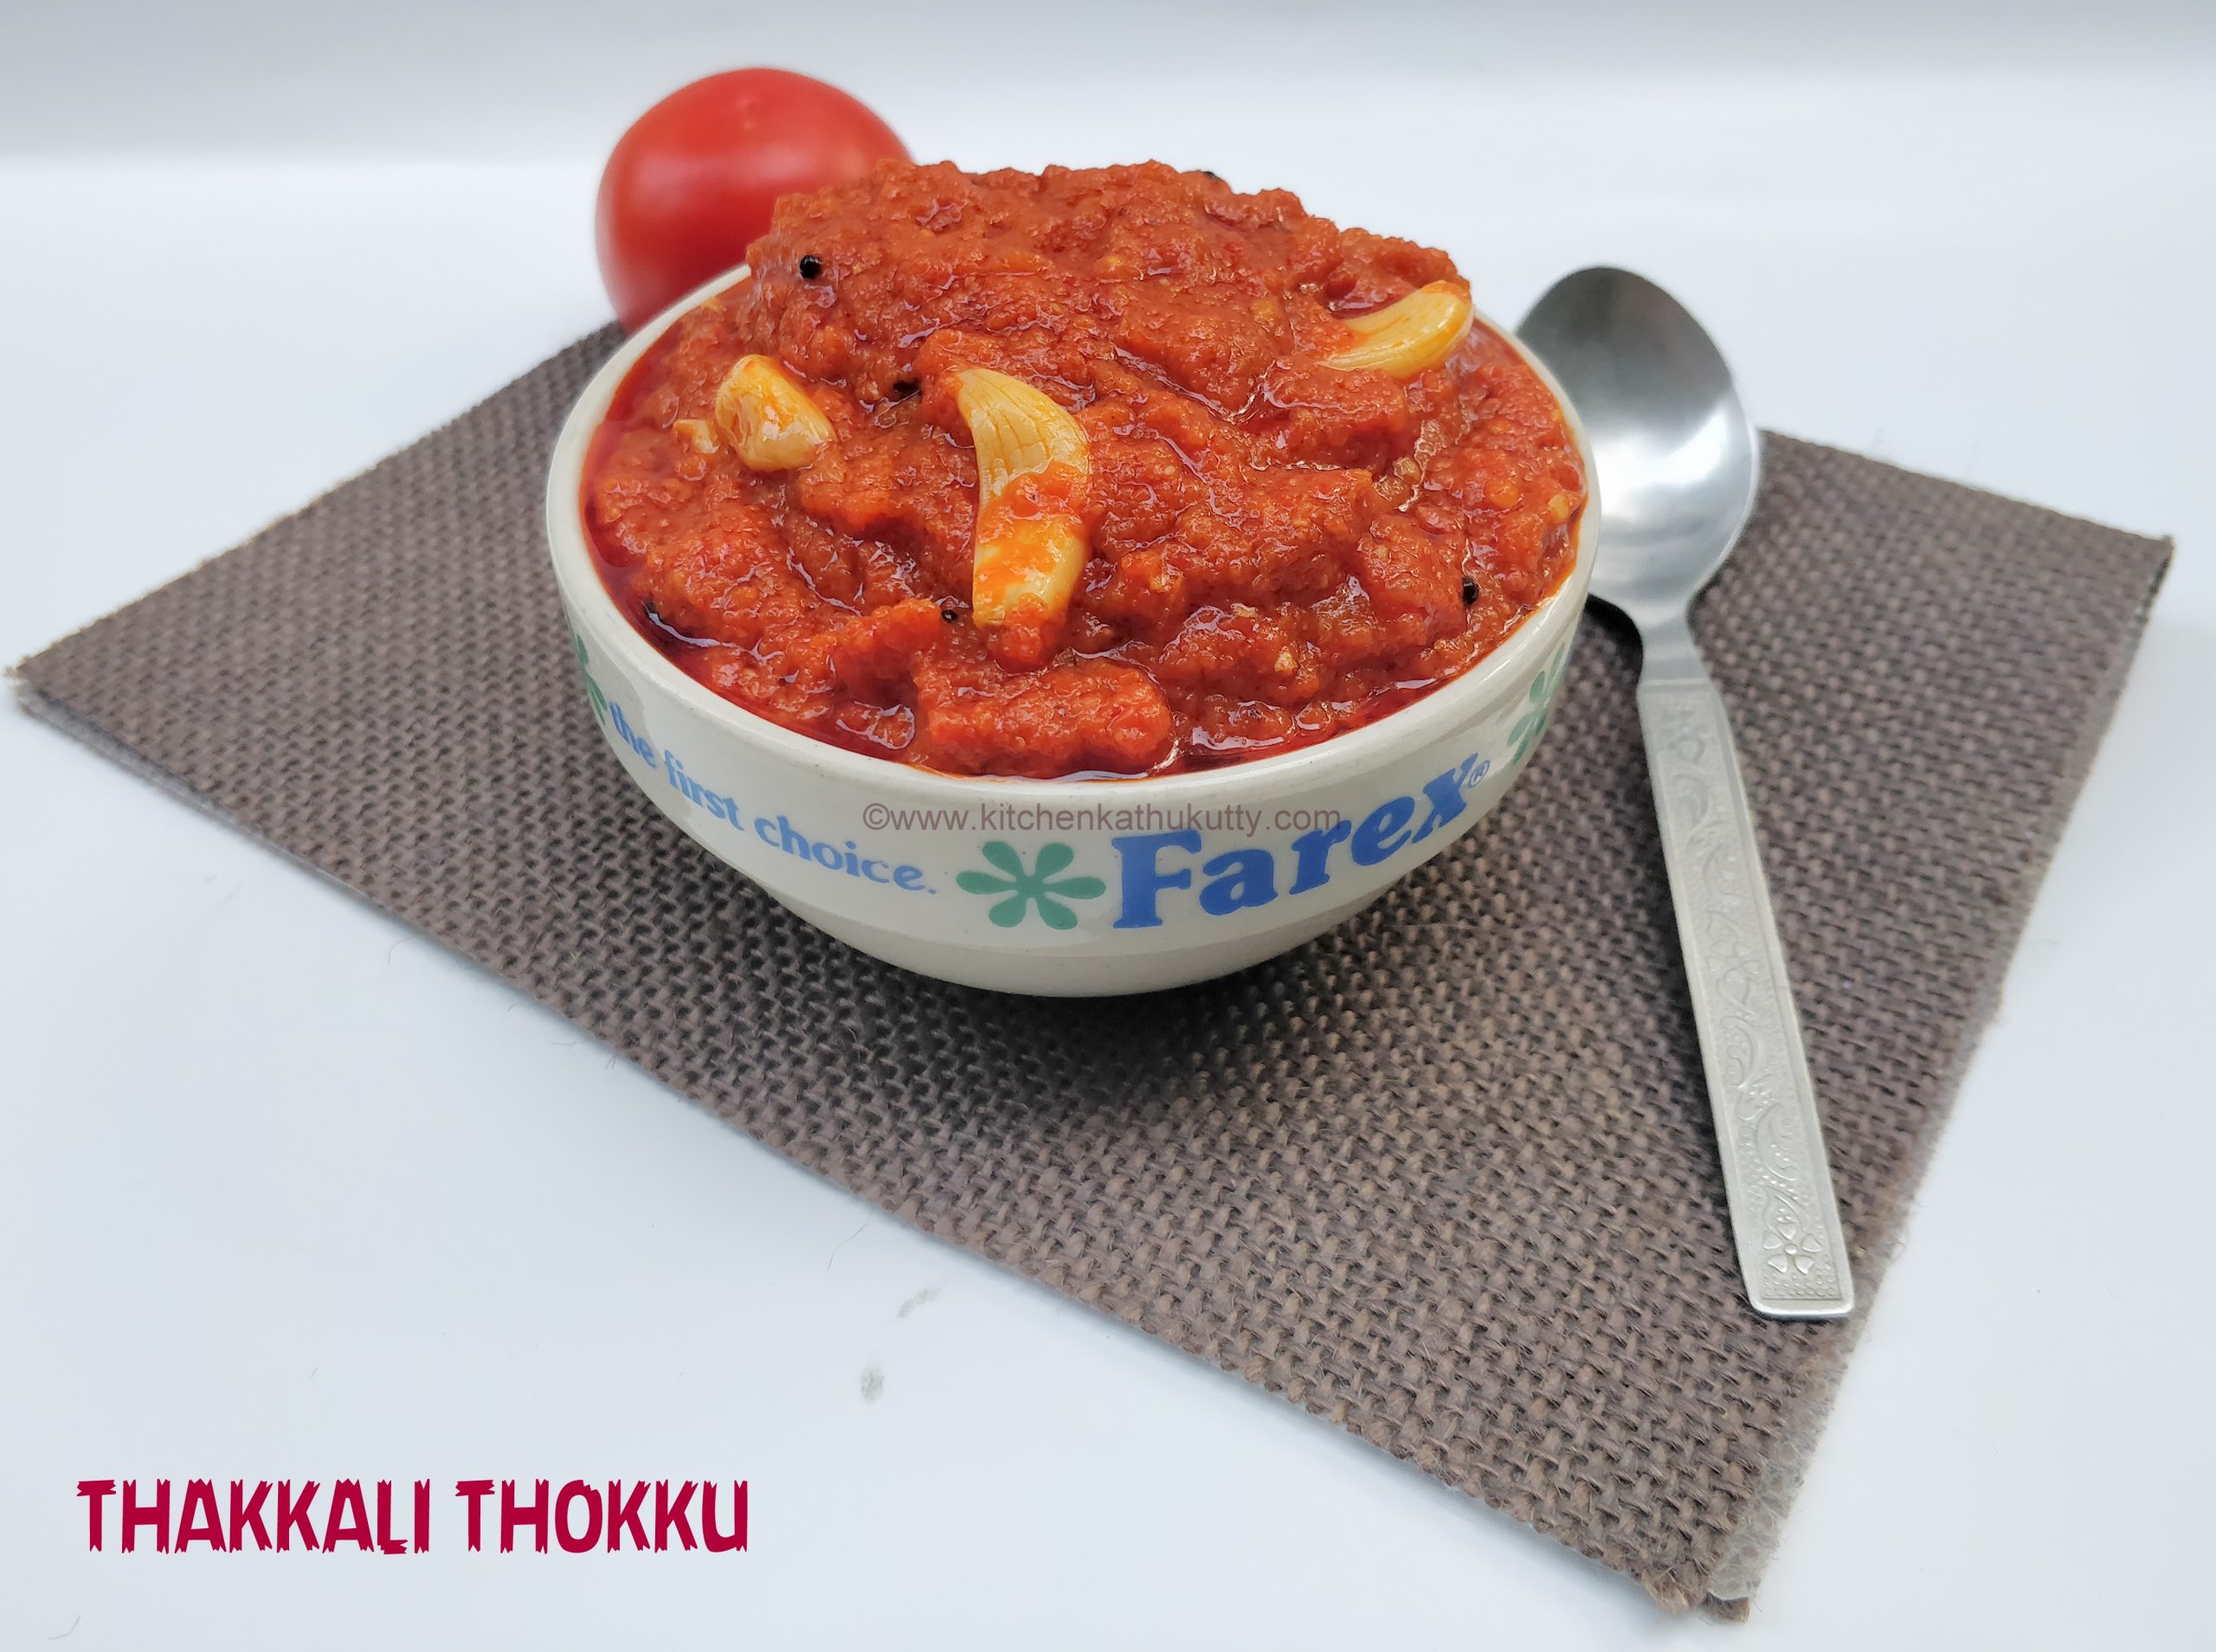 tomato thokku recipe